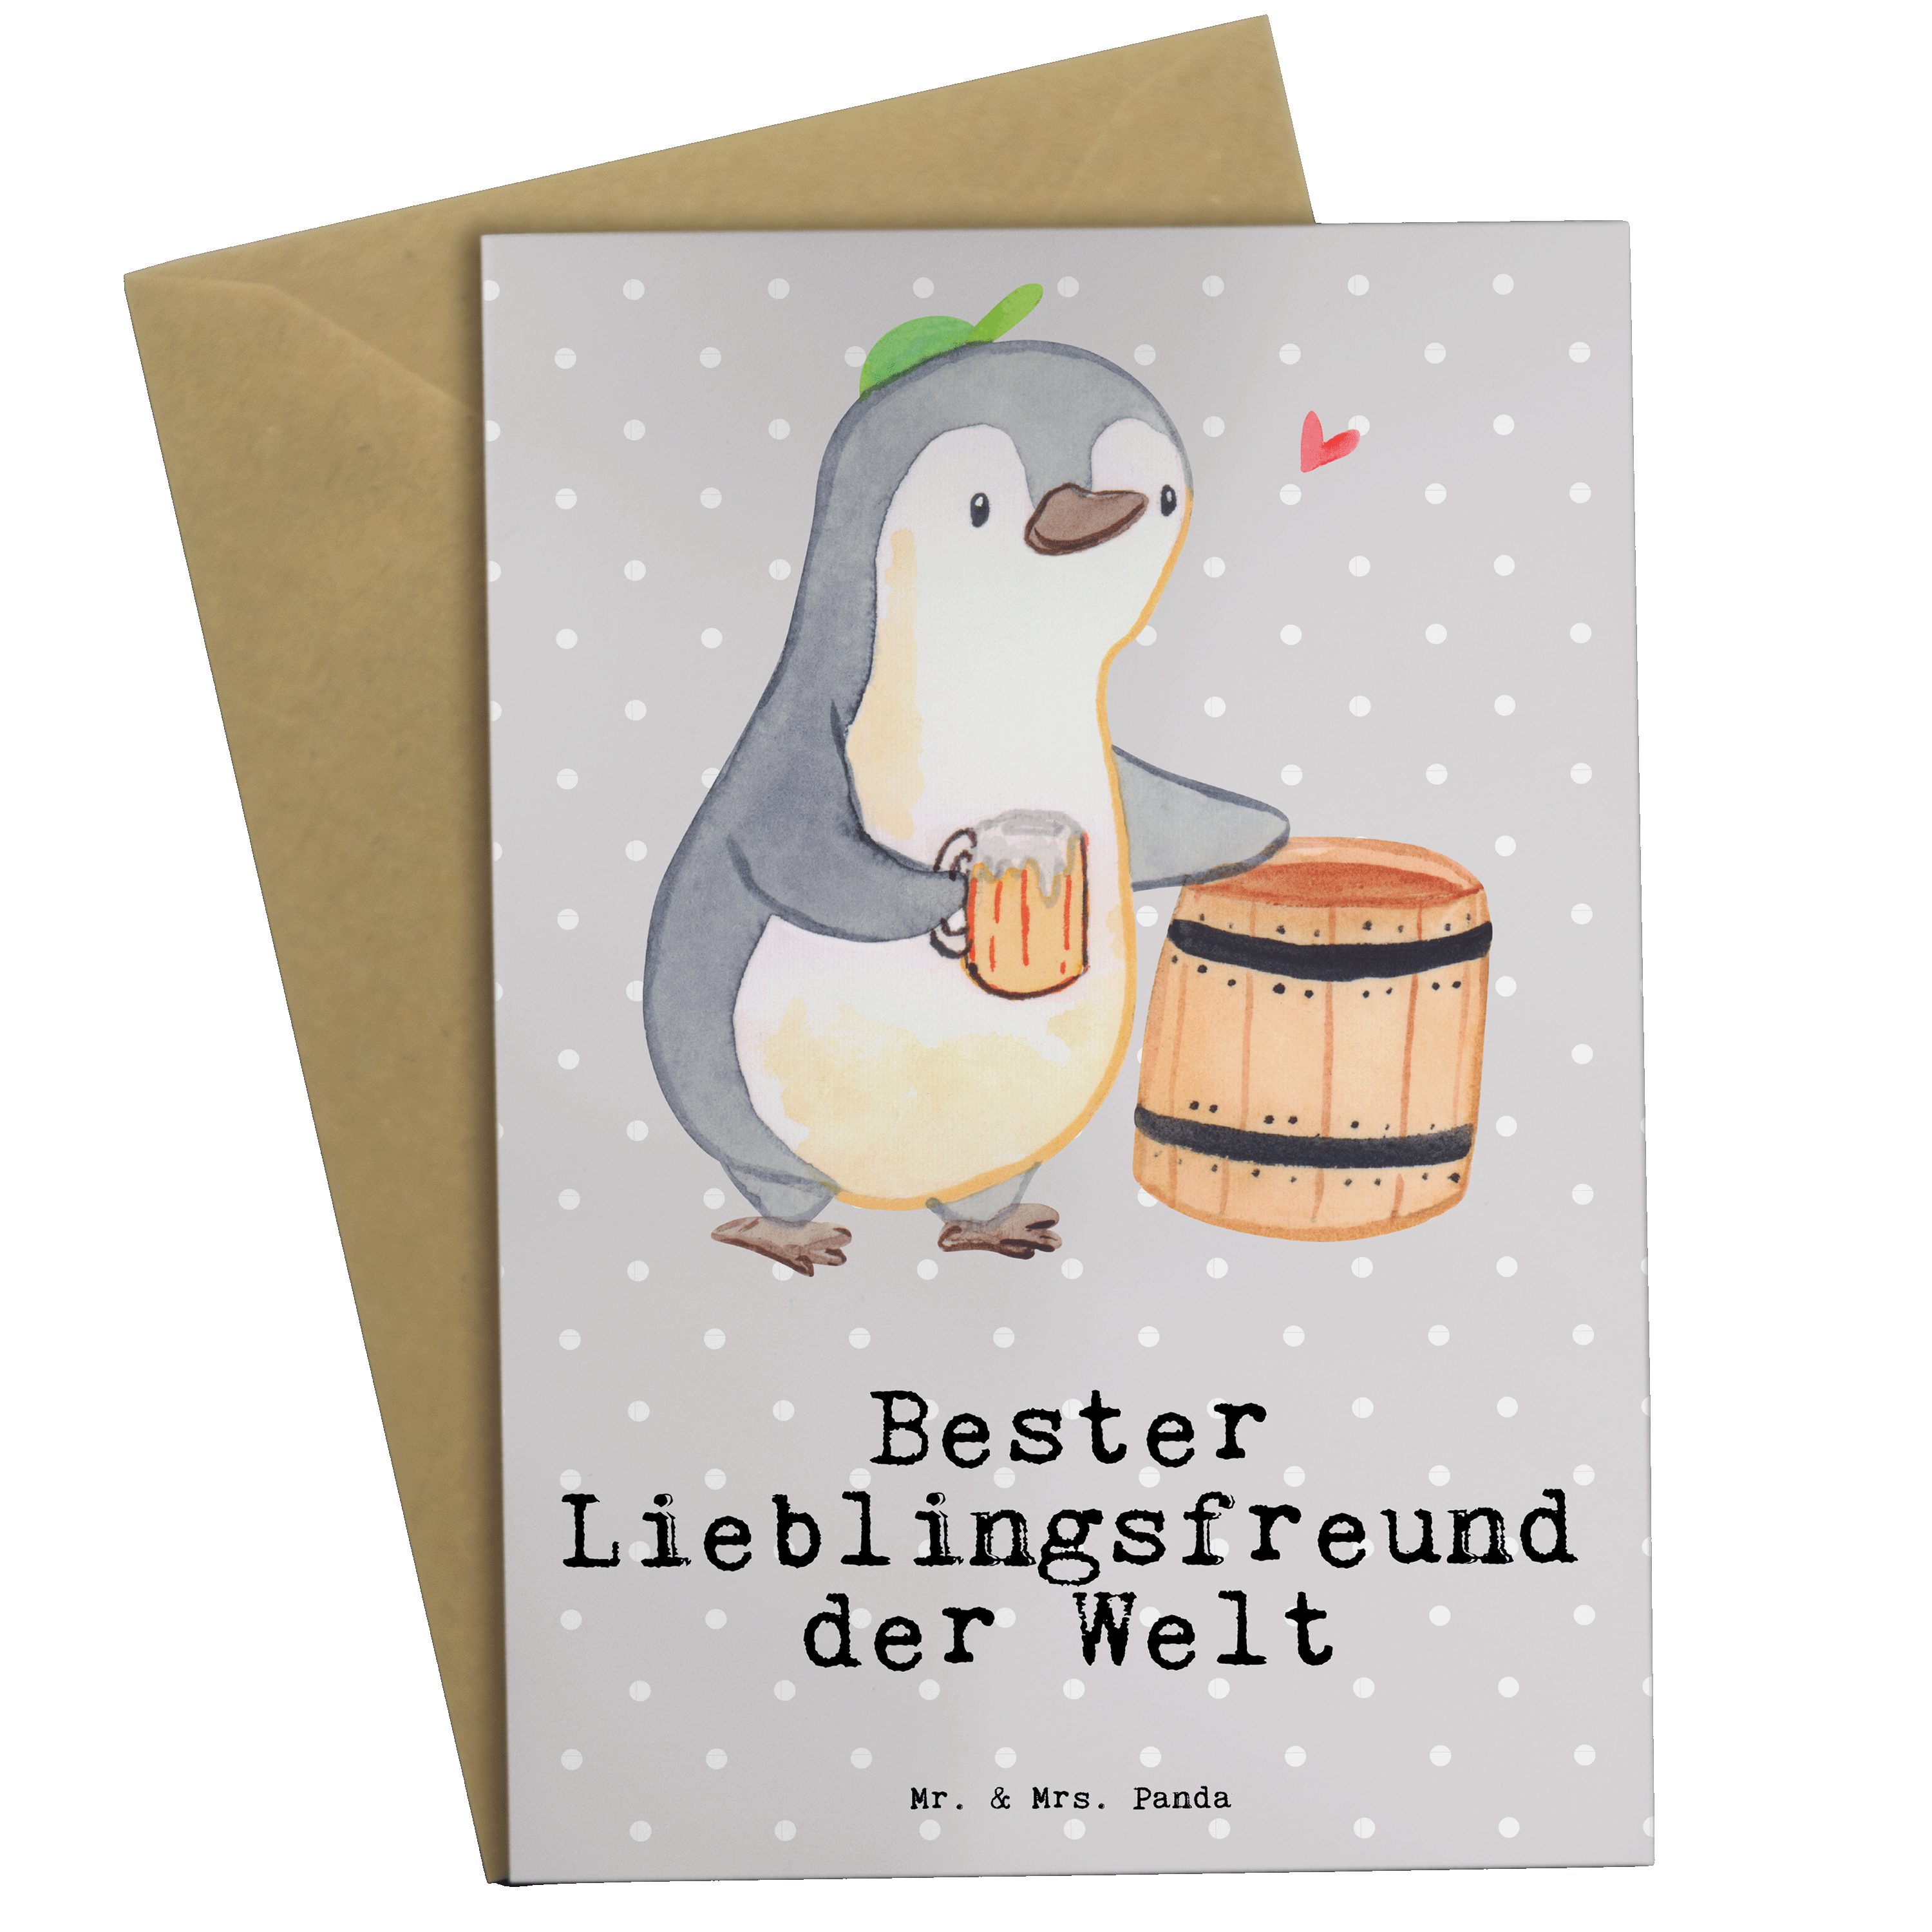 Mr. & Mrs. Panda Grußkarte Geschenk, Lieblingsfreund Welt Ge Grau Pastell - Bester der - Pinguin